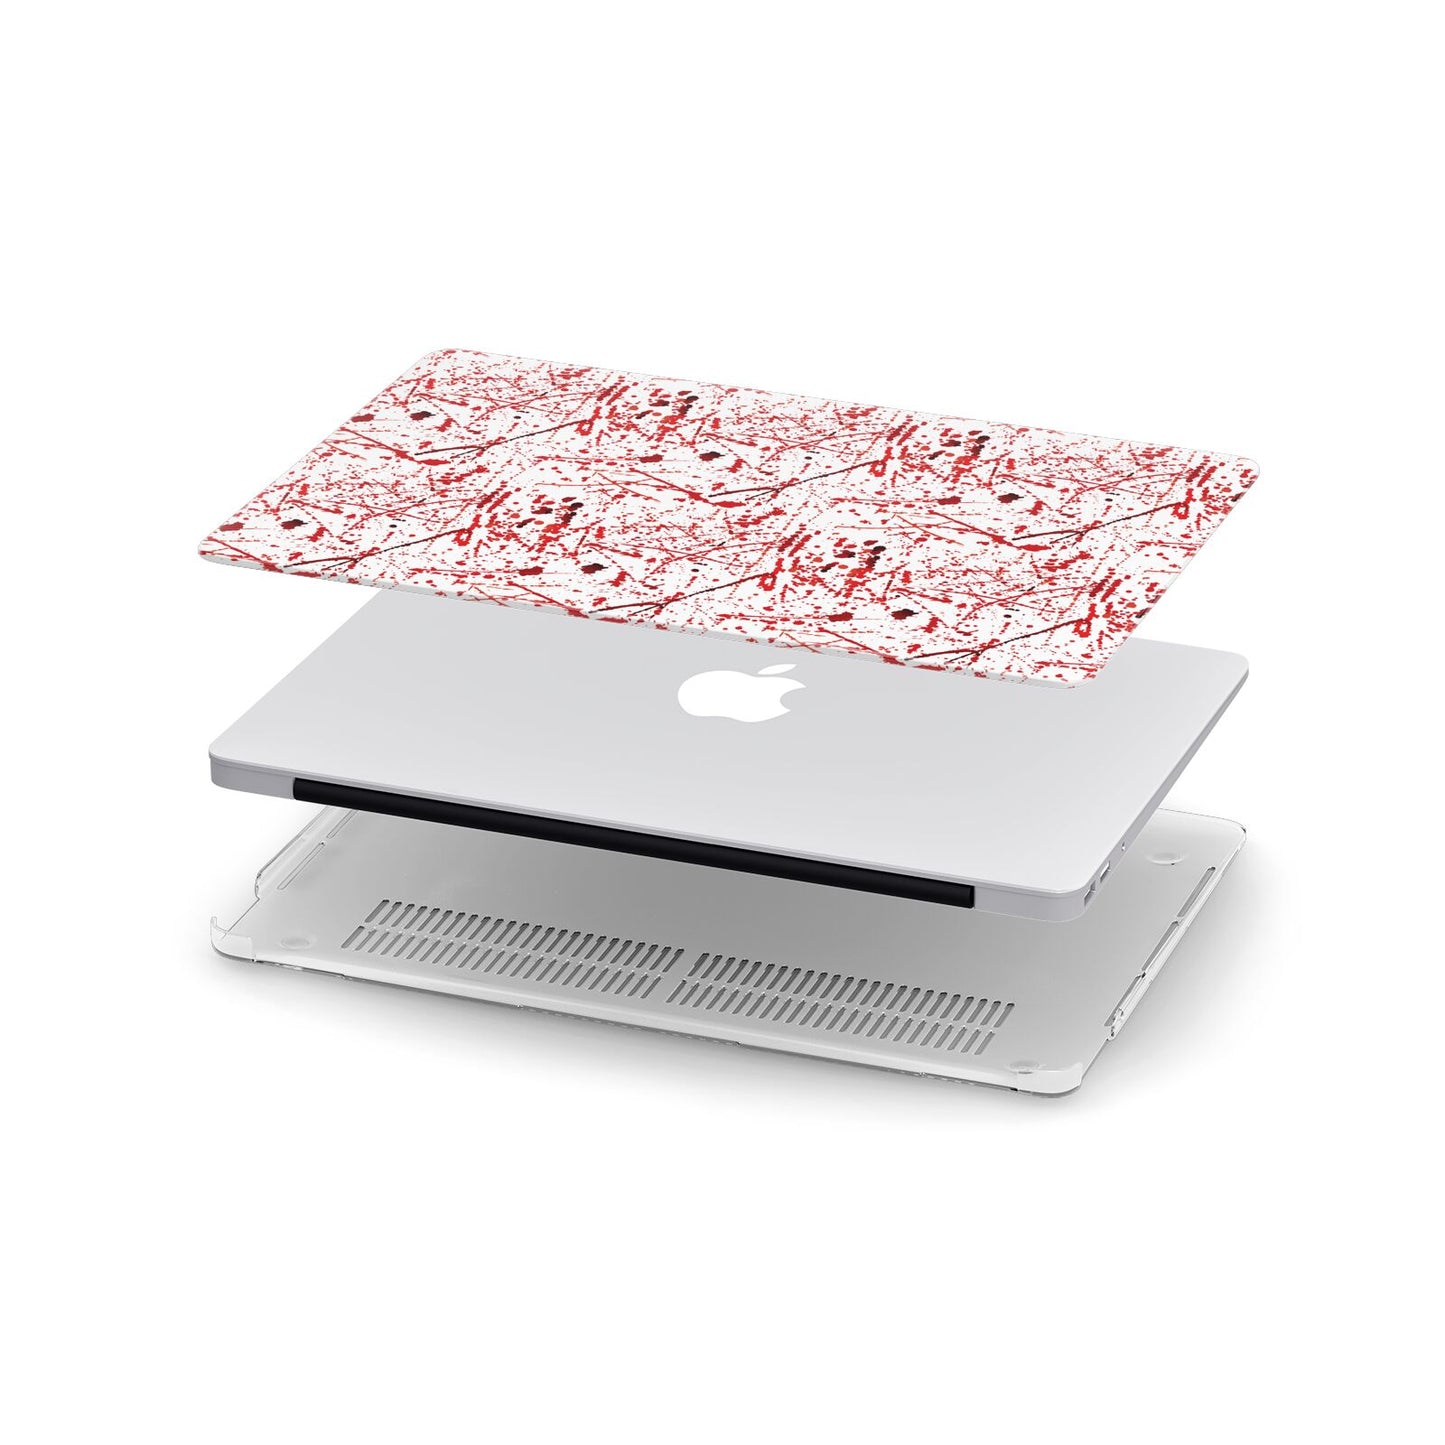 Blood Splatter Apple MacBook Case in Detail